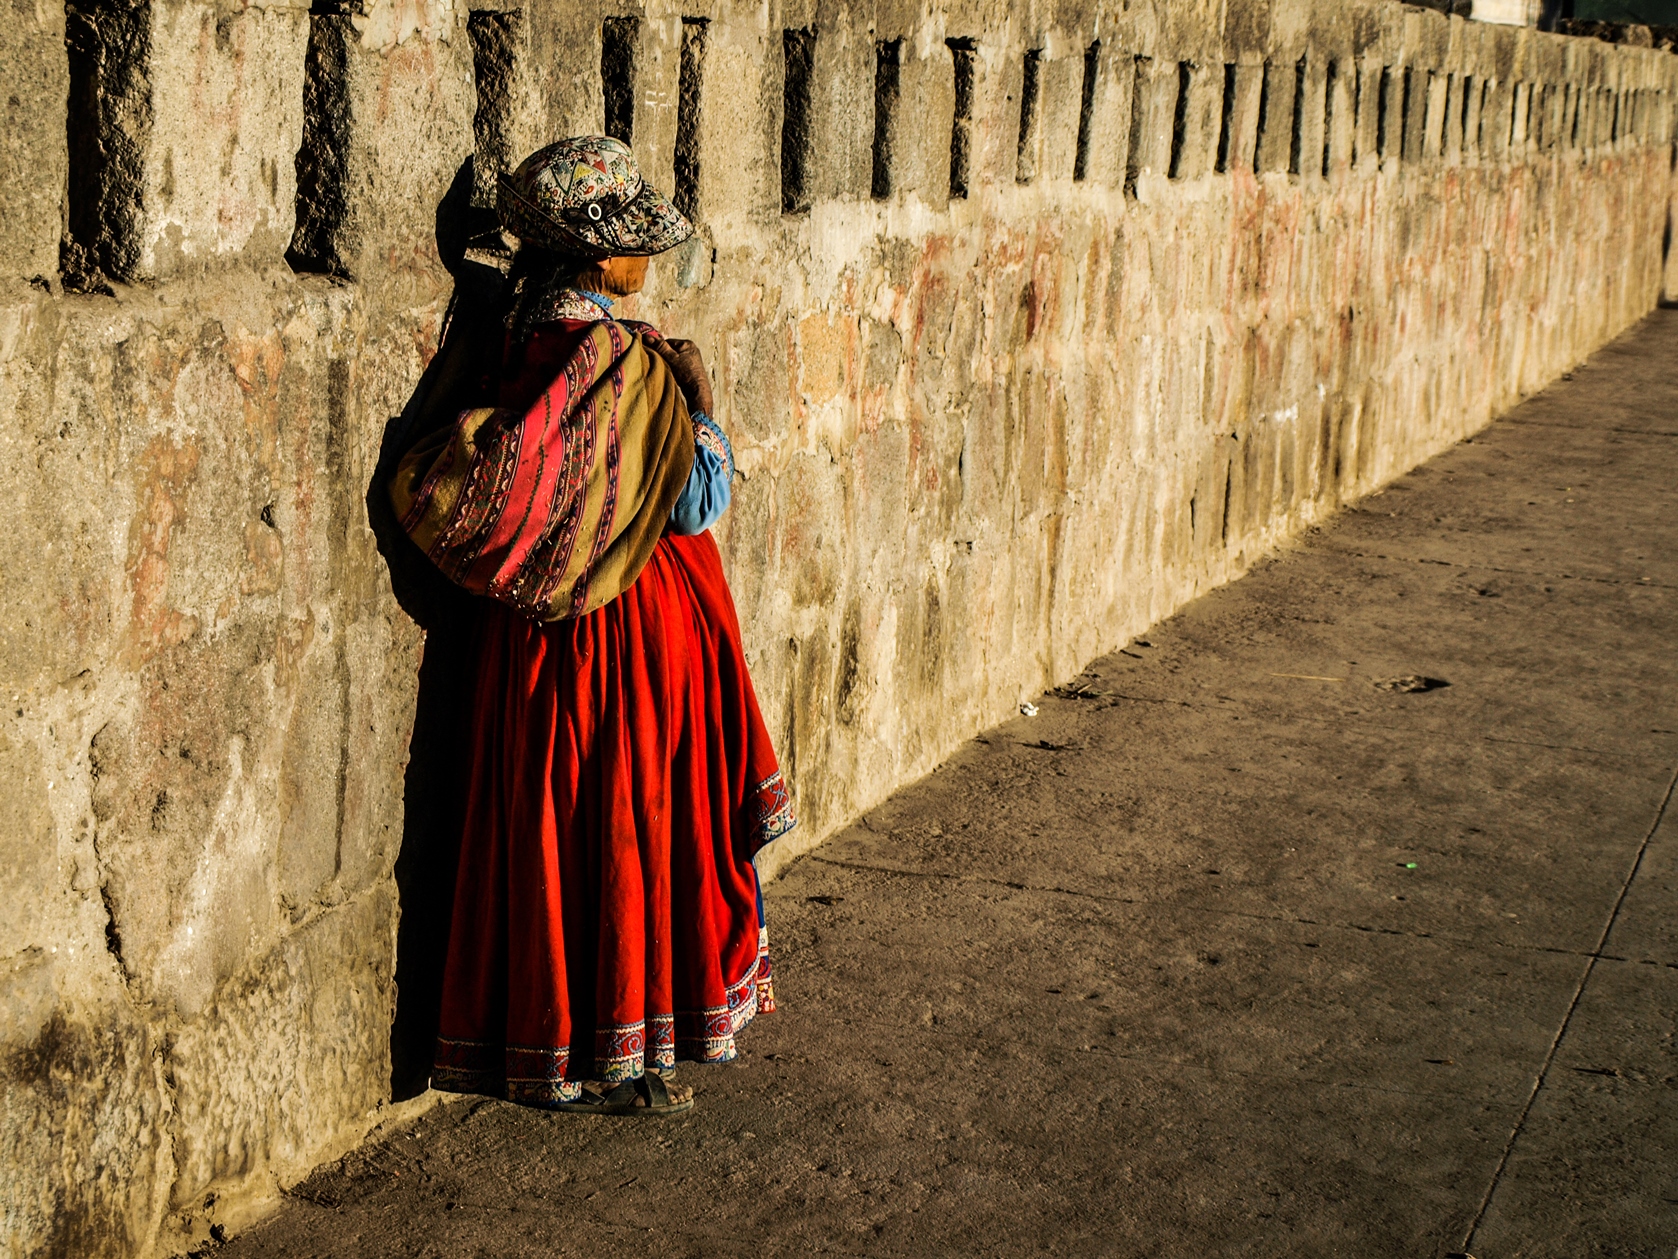 Traditional dress worn by a child on a wall, Ecuador